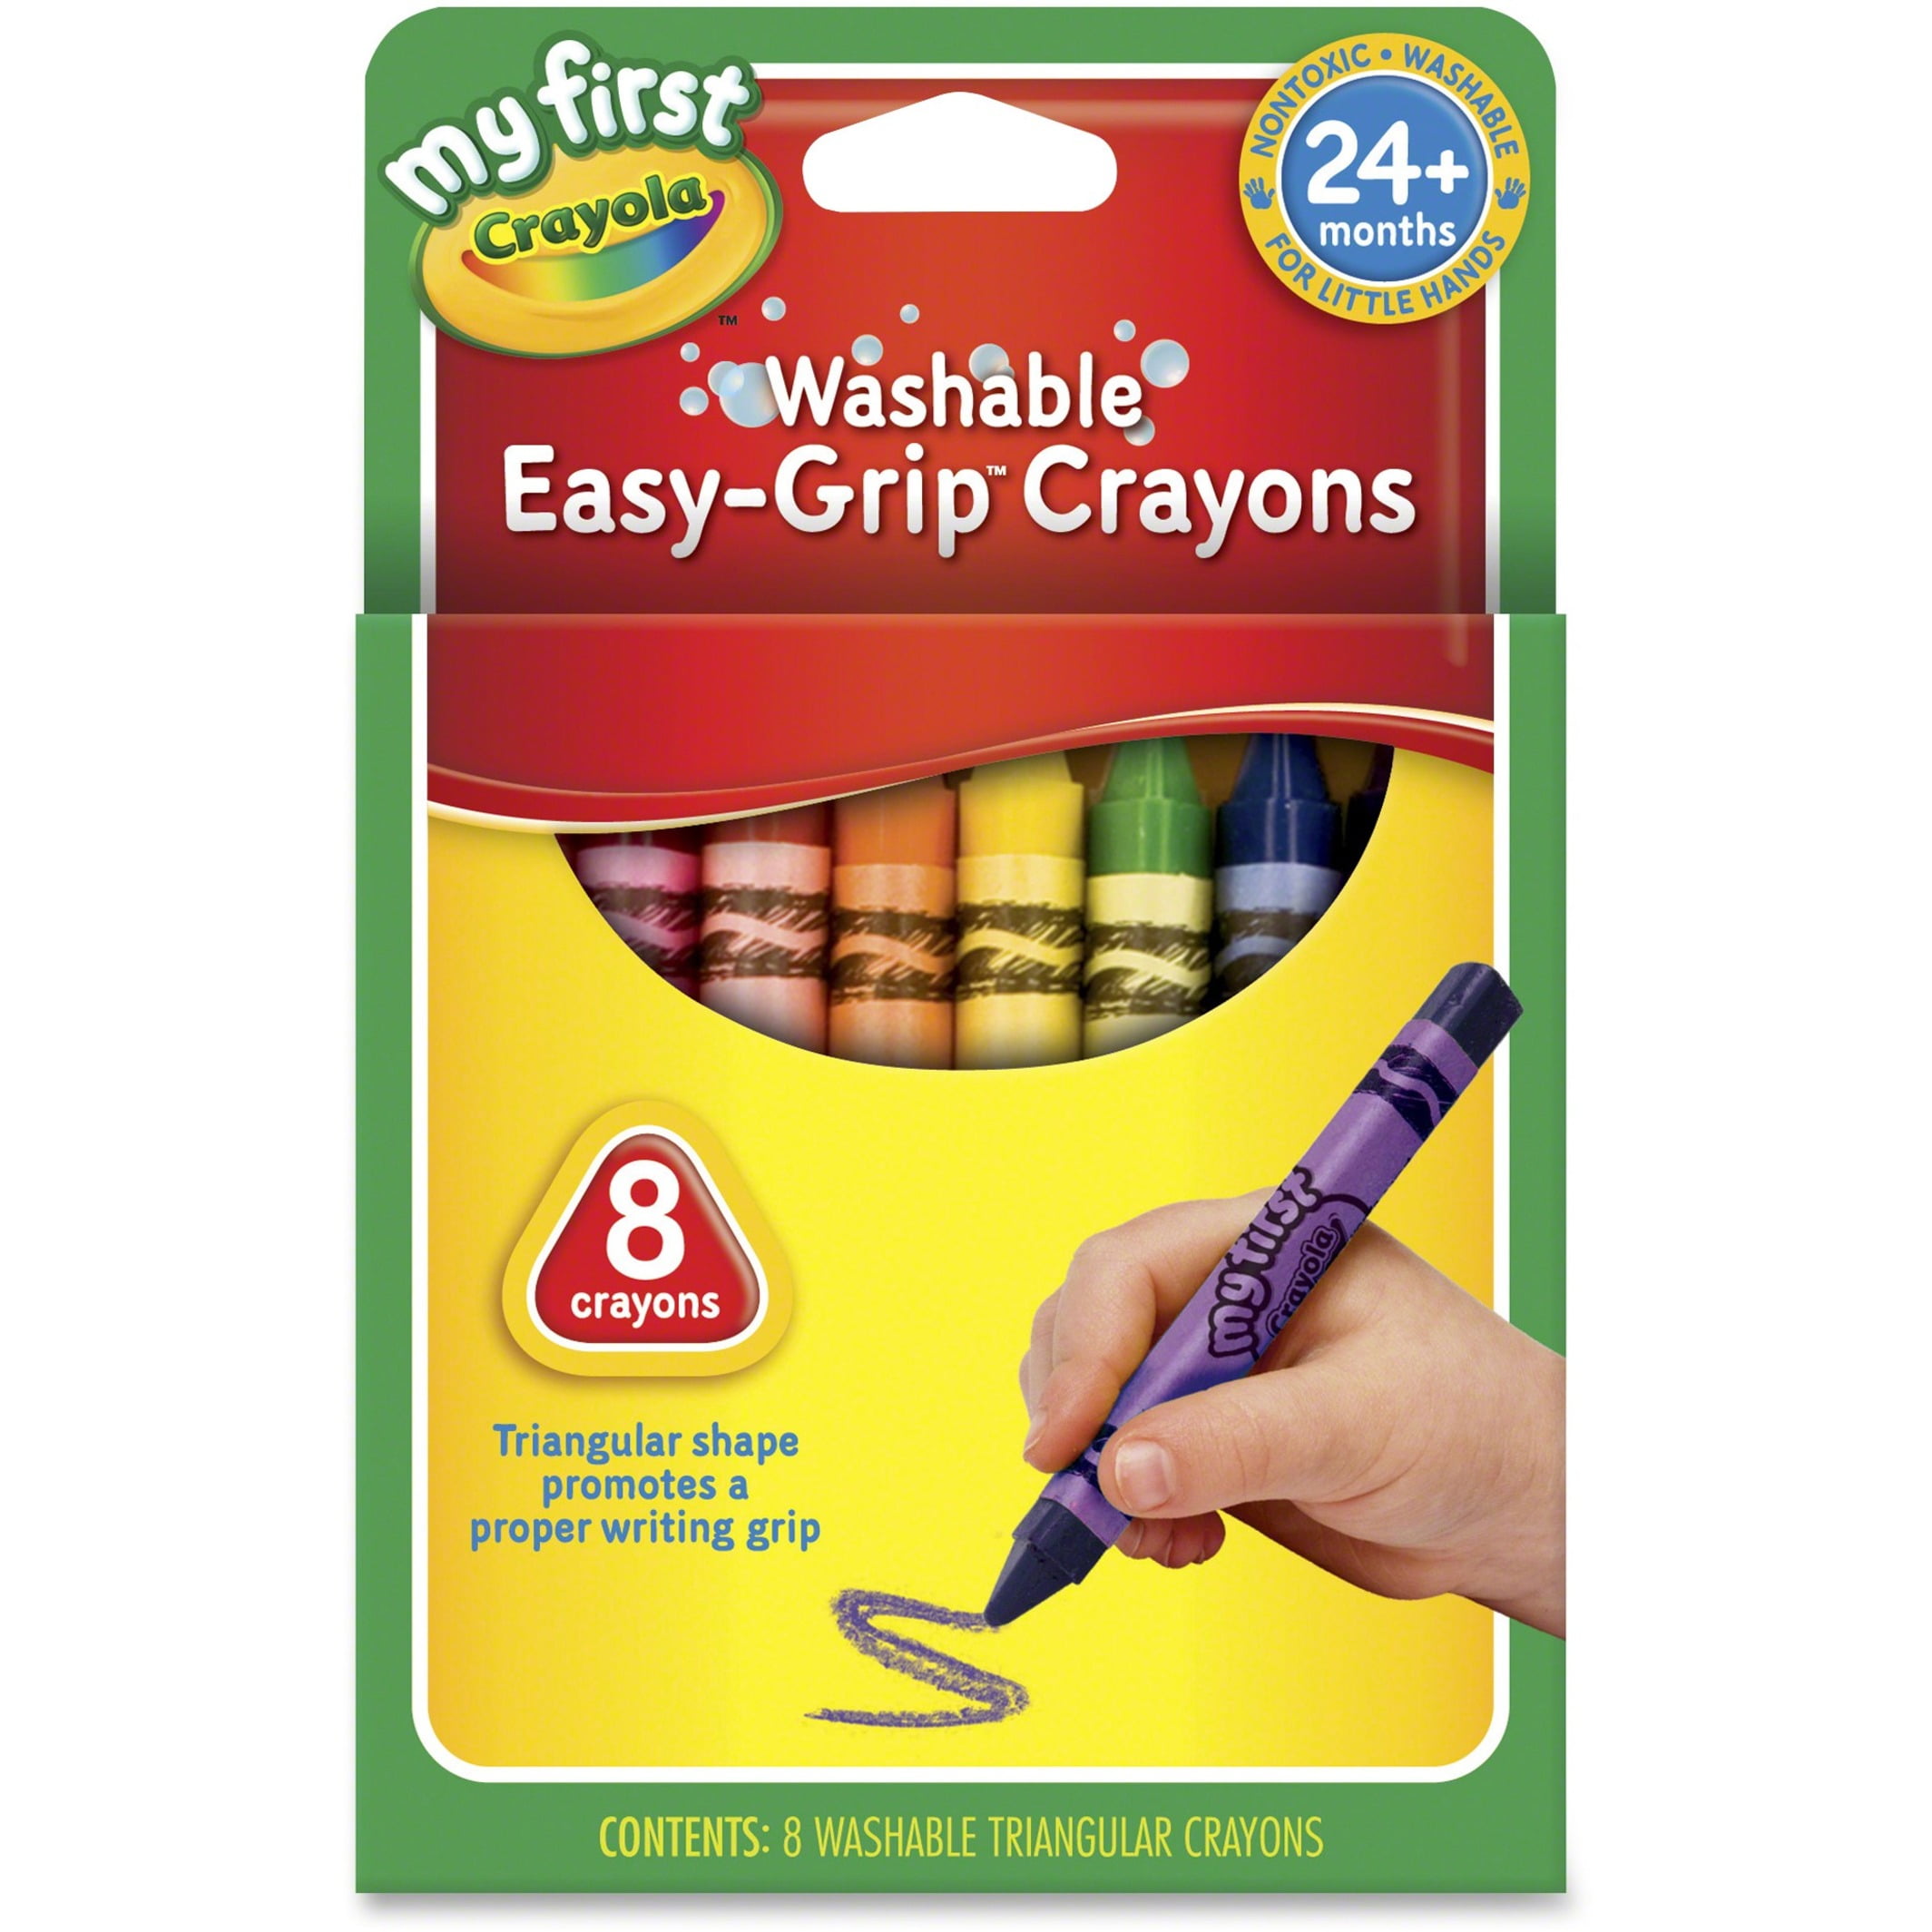 Crayola My First Crayola Washable Tripod Grip Crayons, 1 - Smith's Food and  Drug